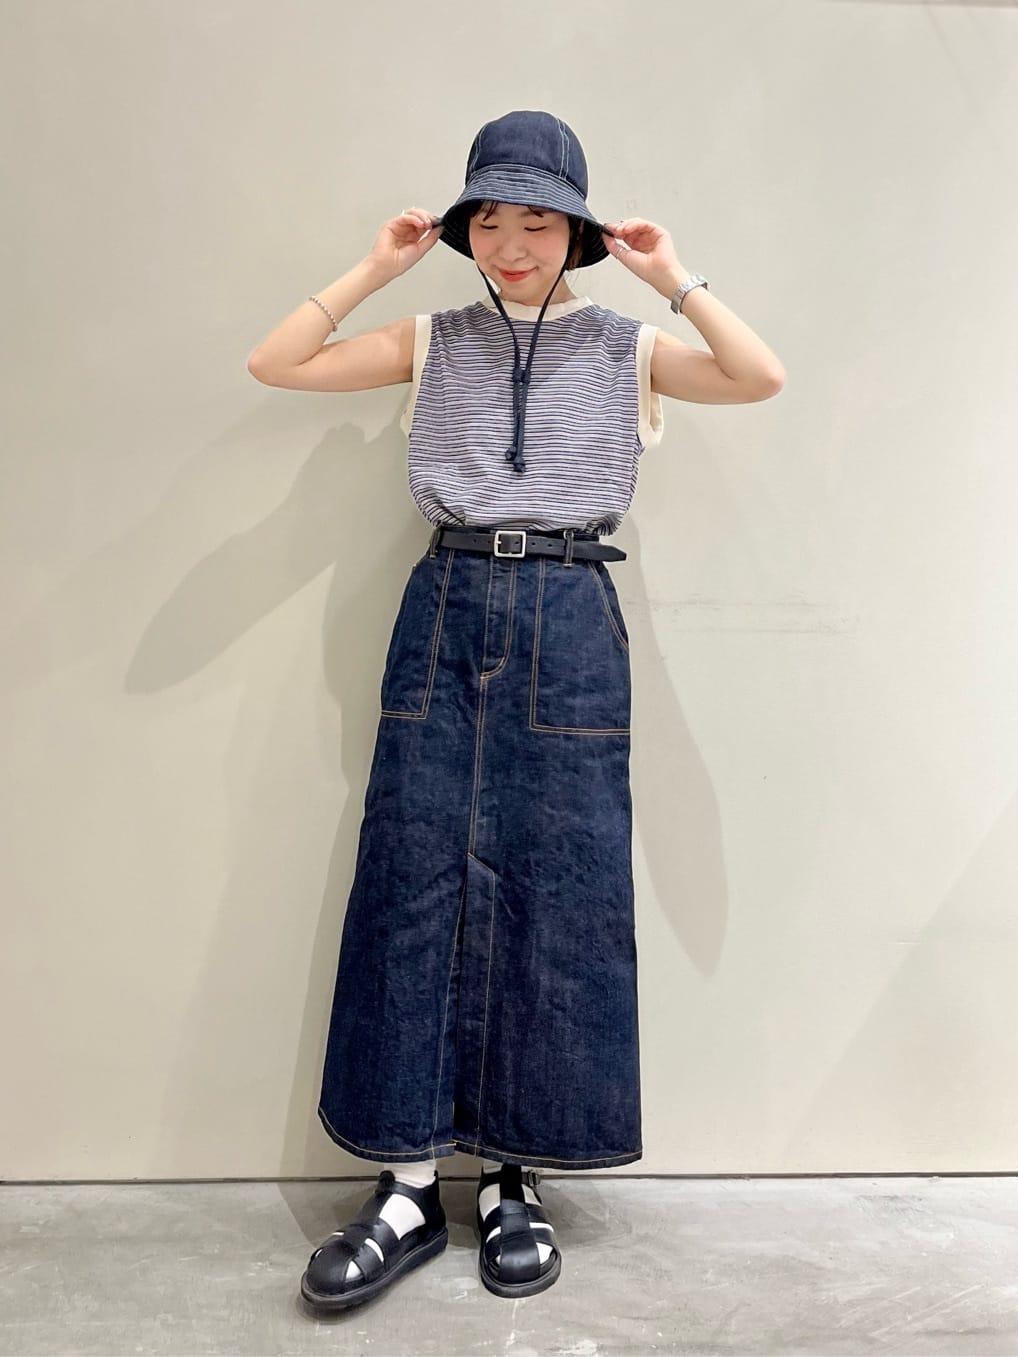 Dot and Stripes CHILD WOMAN CHILD WOMAN , PAR ICI 新宿ミロード 身長：154cm 2023.05.12